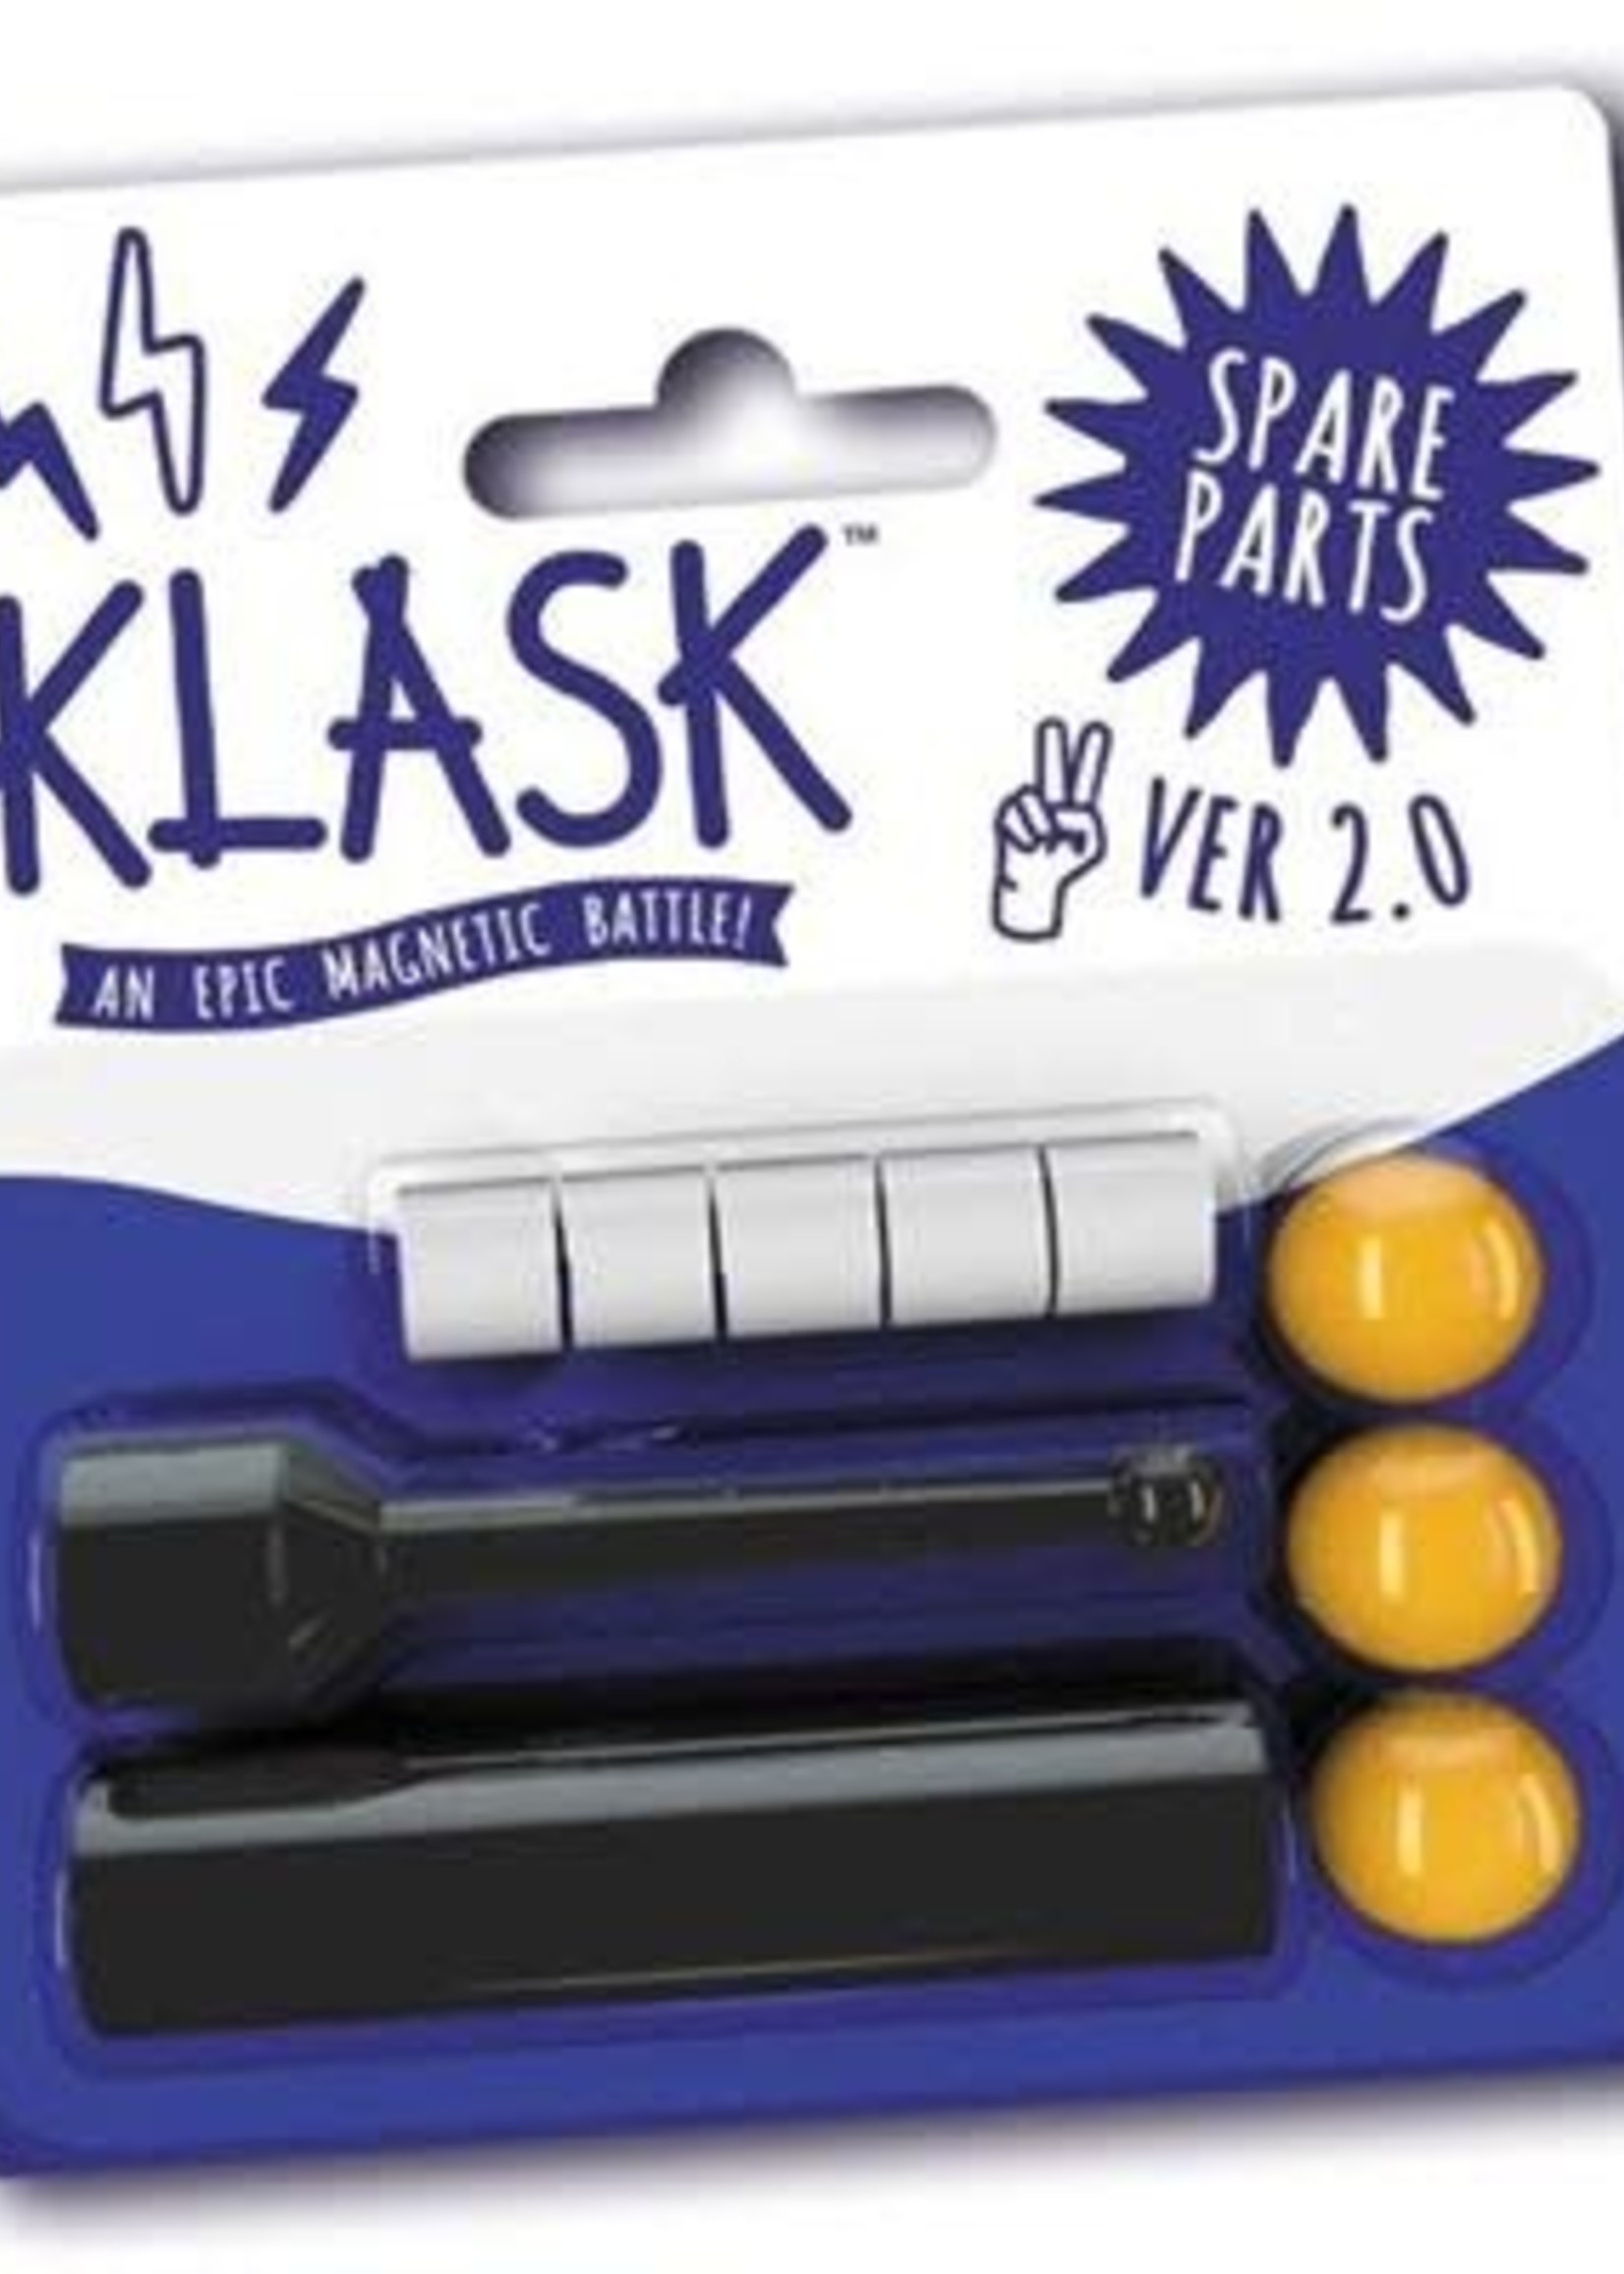 Oy Marektoy Klask Spare Parts Kit